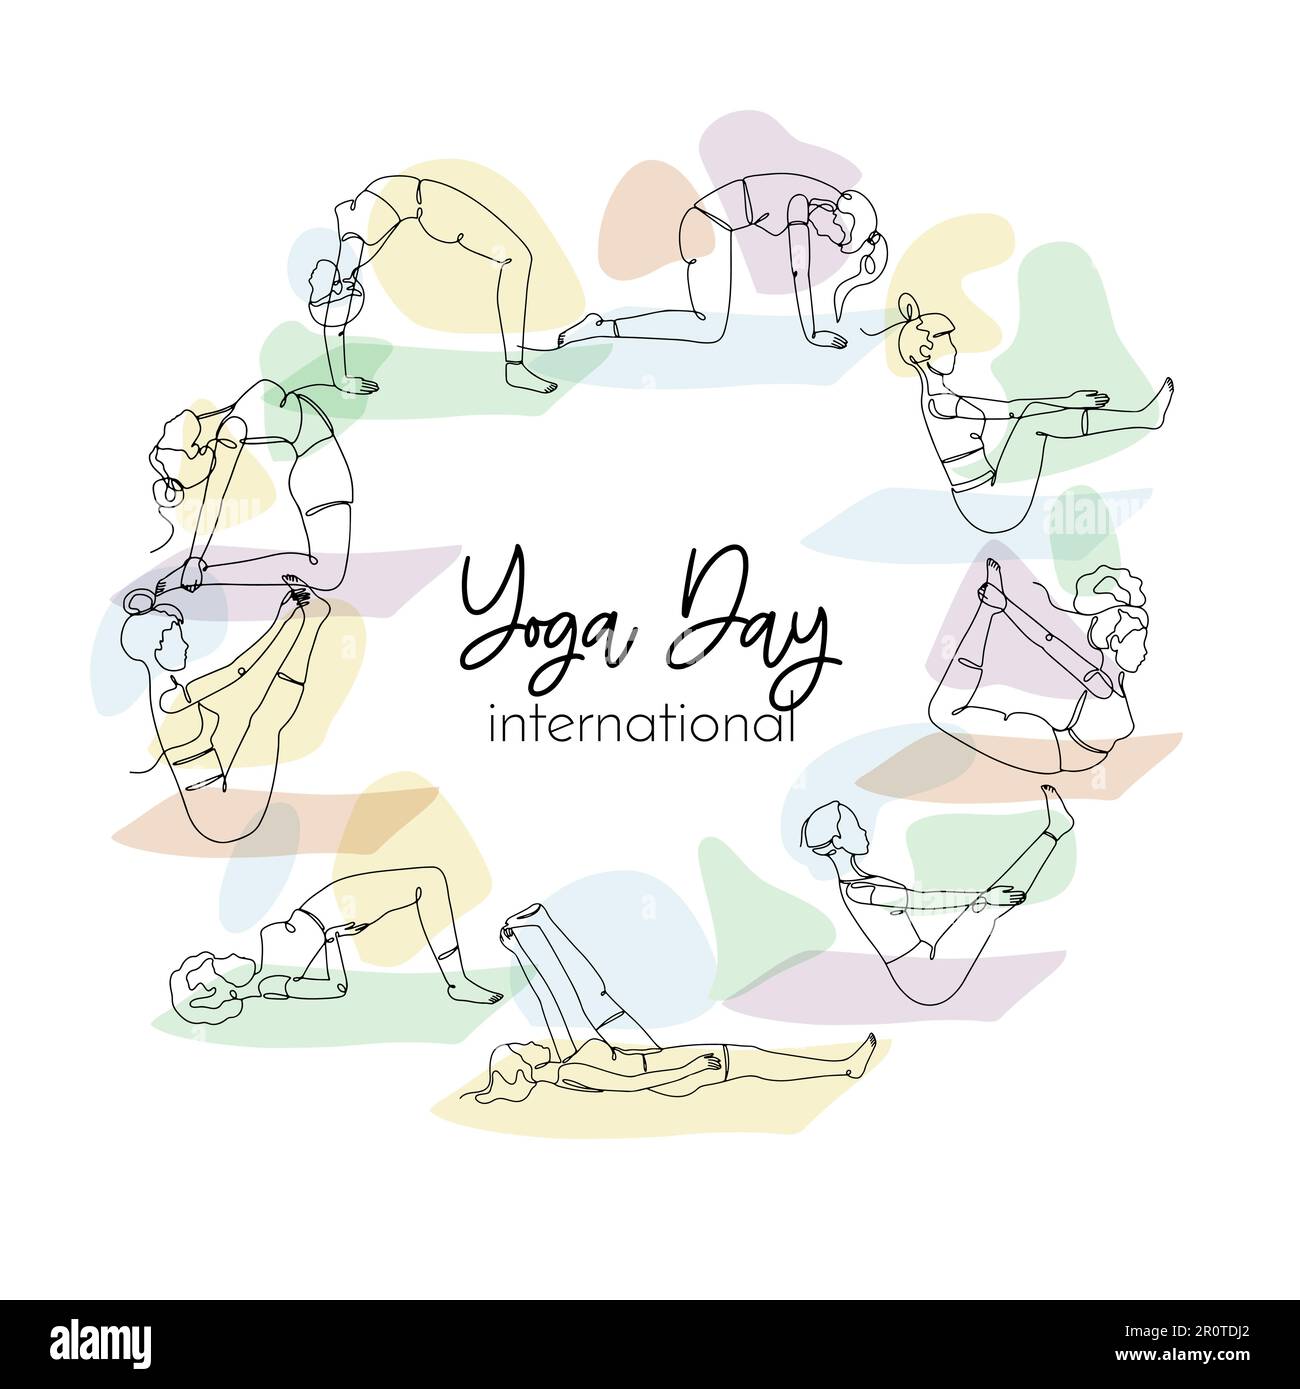 Video in Yoga Day-saigonsouth.com.vn